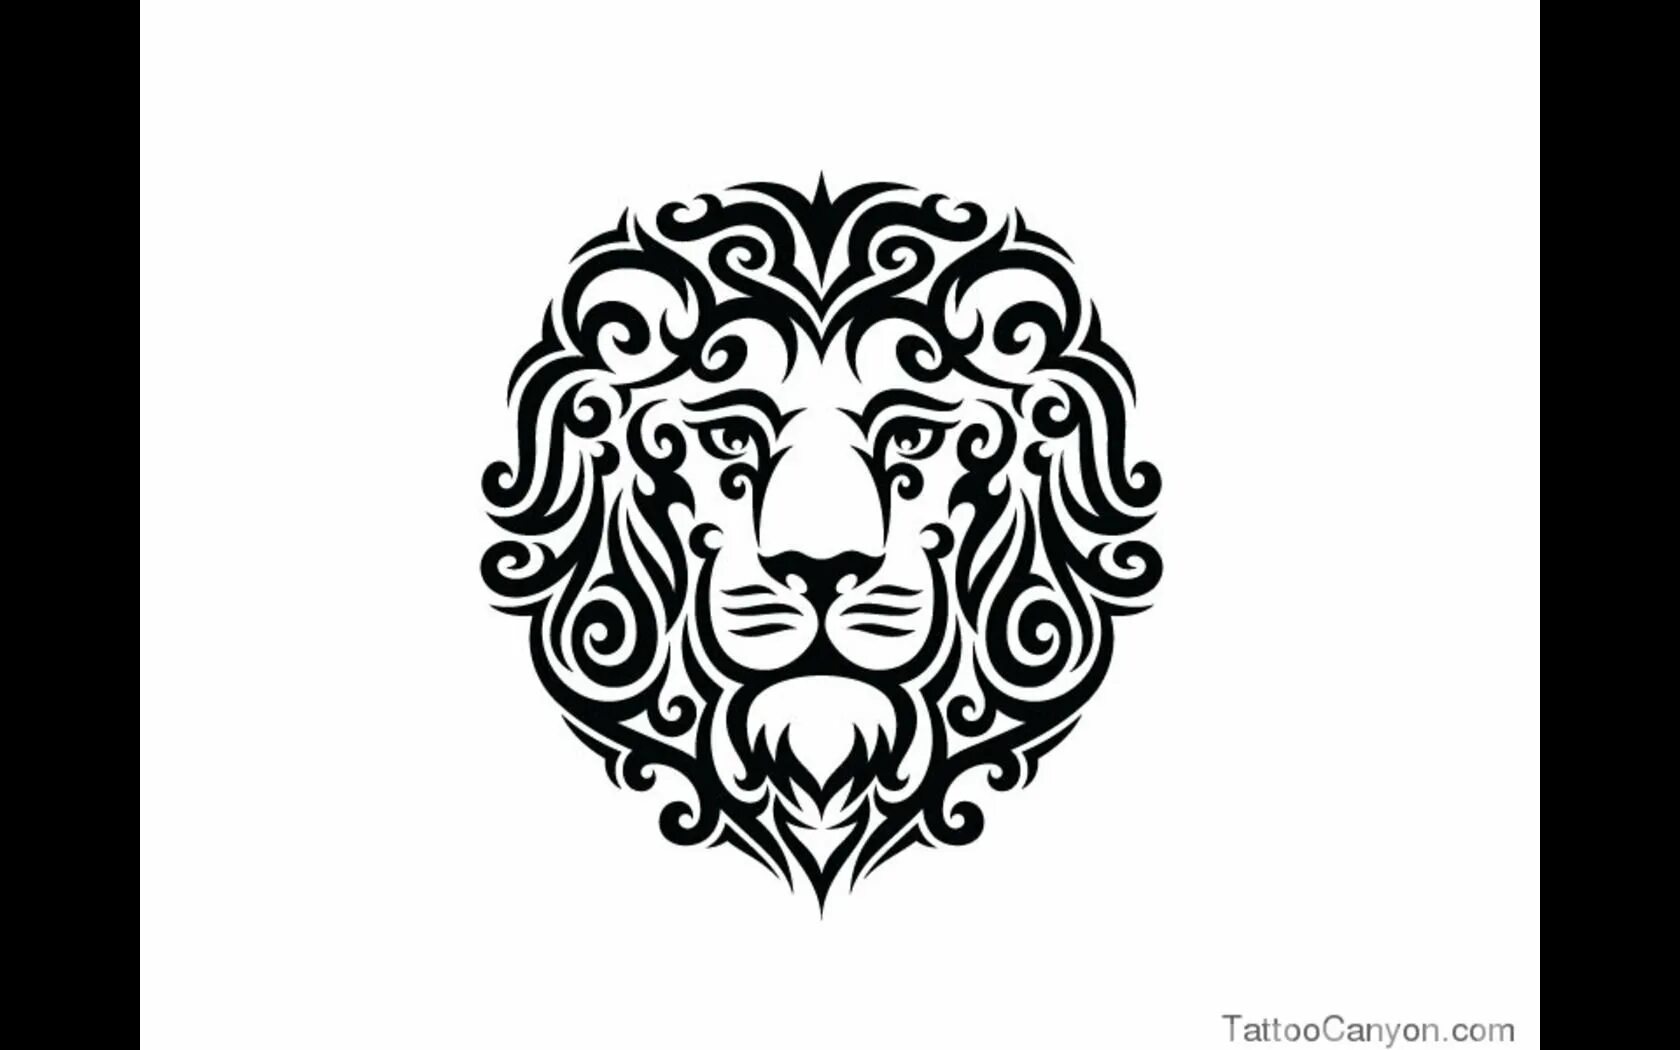 Лев символ герба. Знак зодиака Лев. Лев символ. Стилизованное изображение Льва. Знак Льва символ.